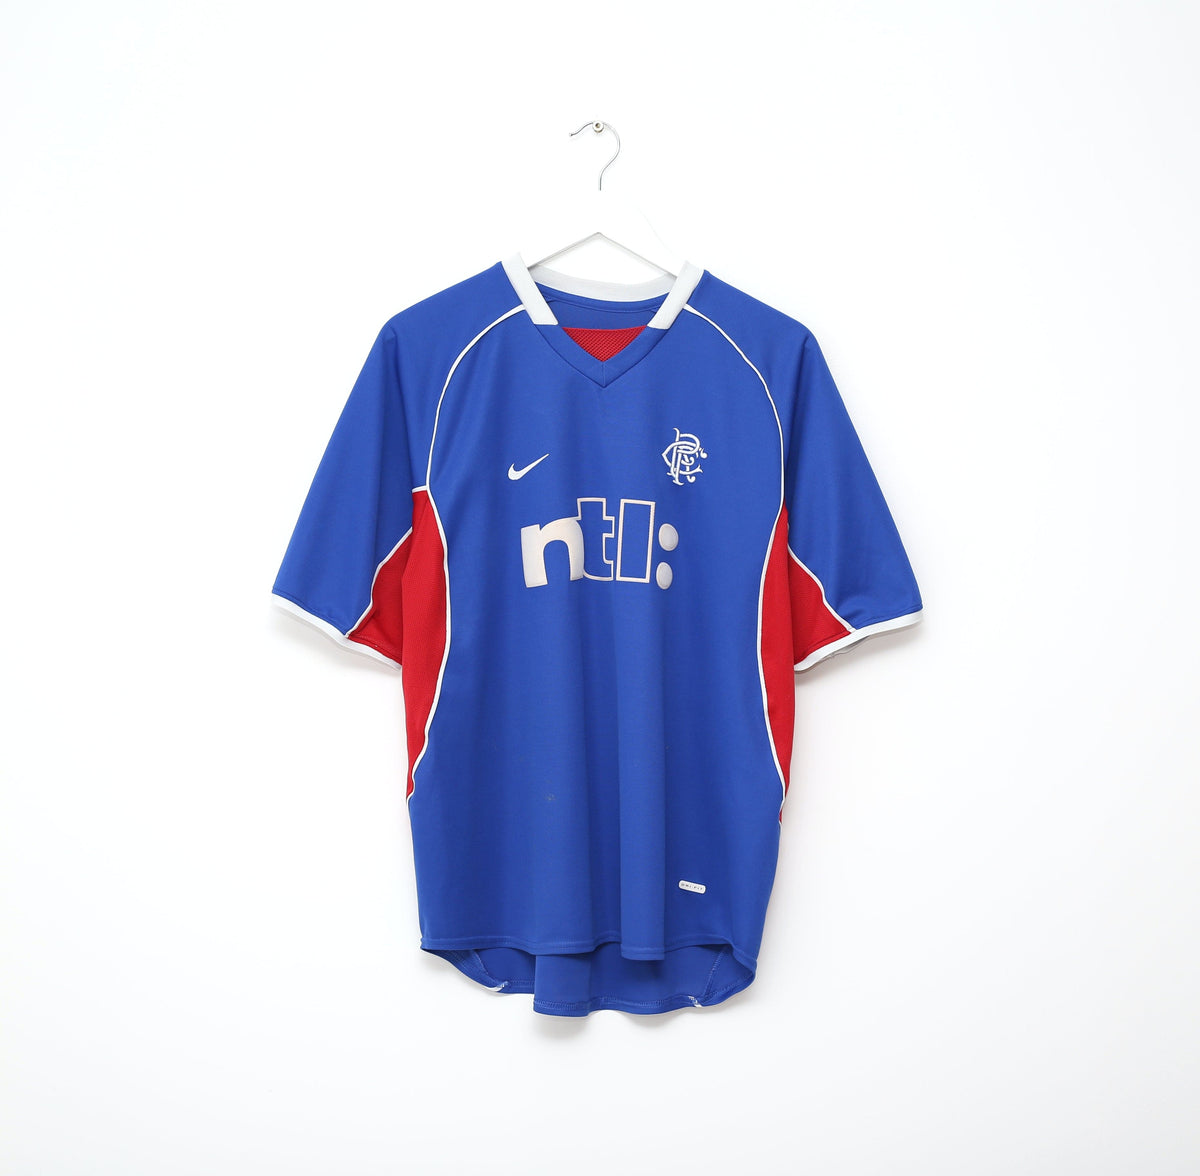 2000/01 Rangers Away Football Shirt / Old Nike Glasgow Soccer